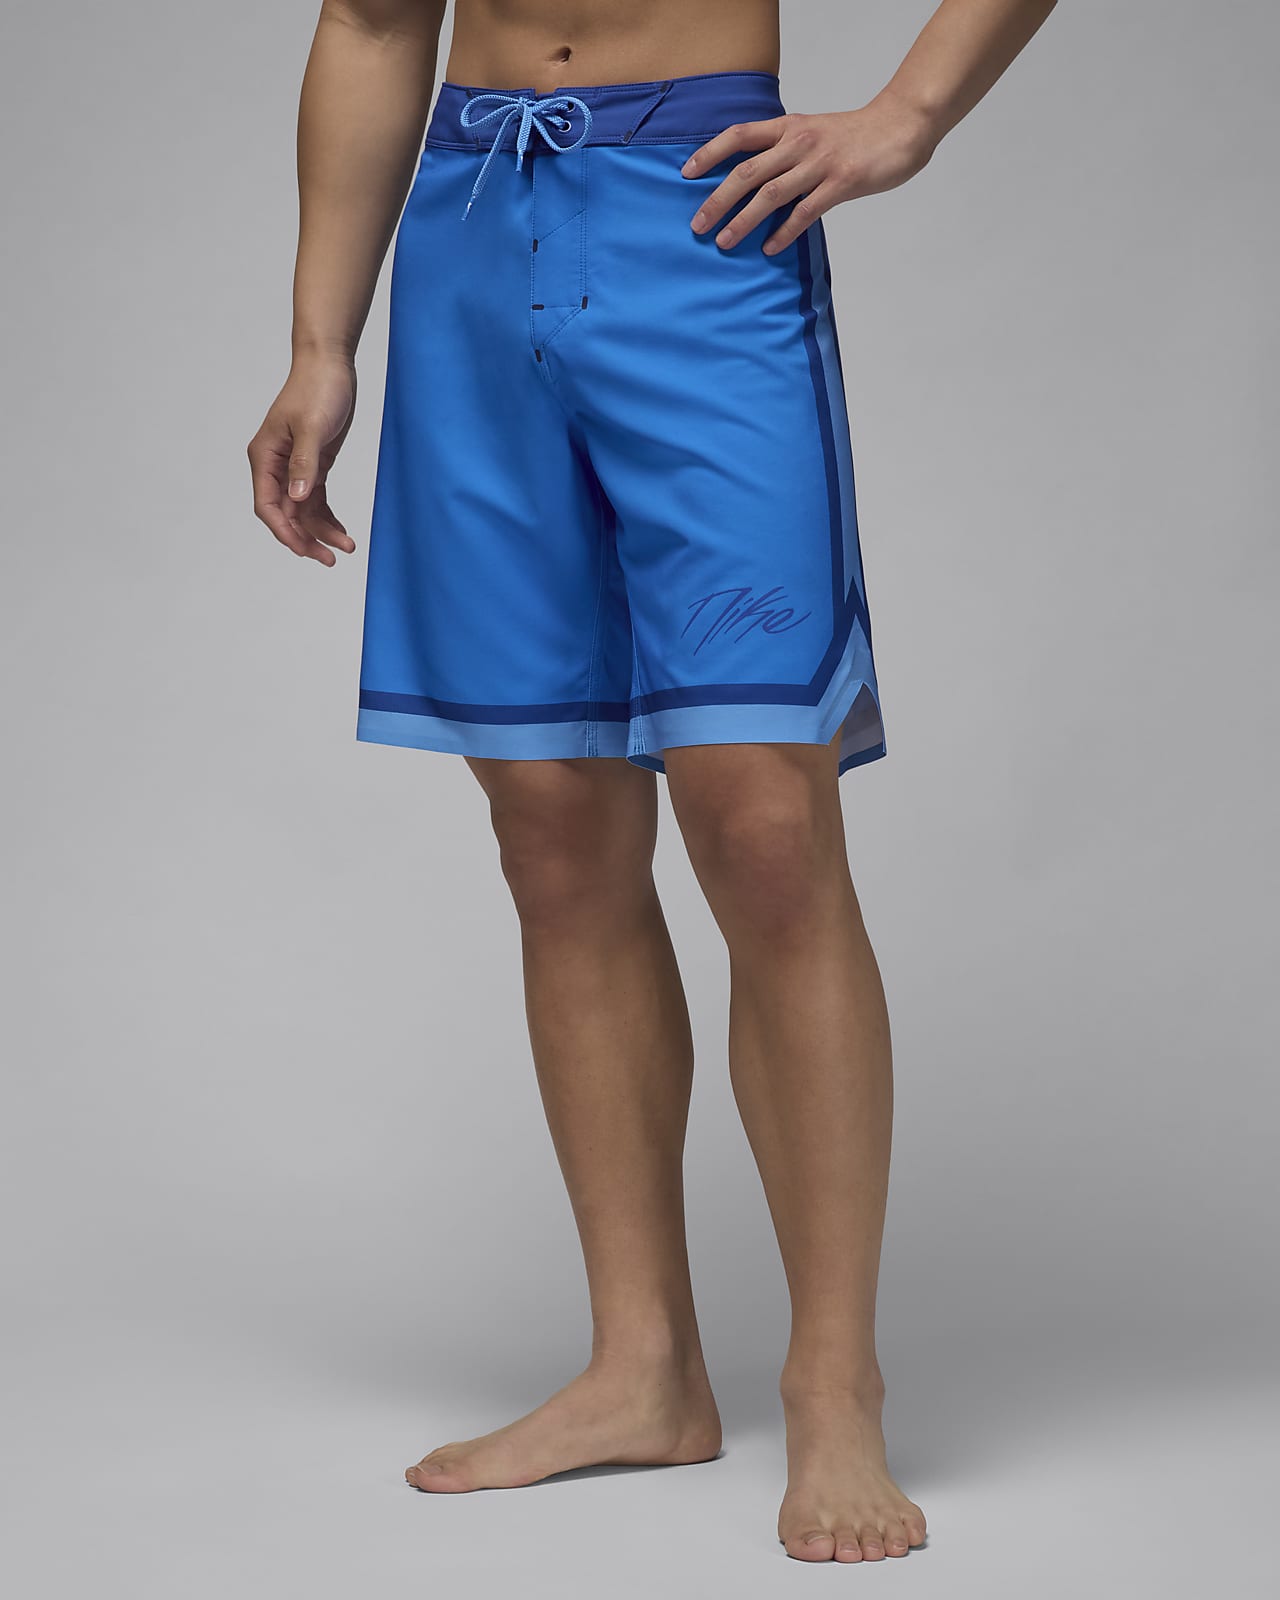 Shorts de surf Fadeaway Poole de 23 cm para hombre Nike Swim